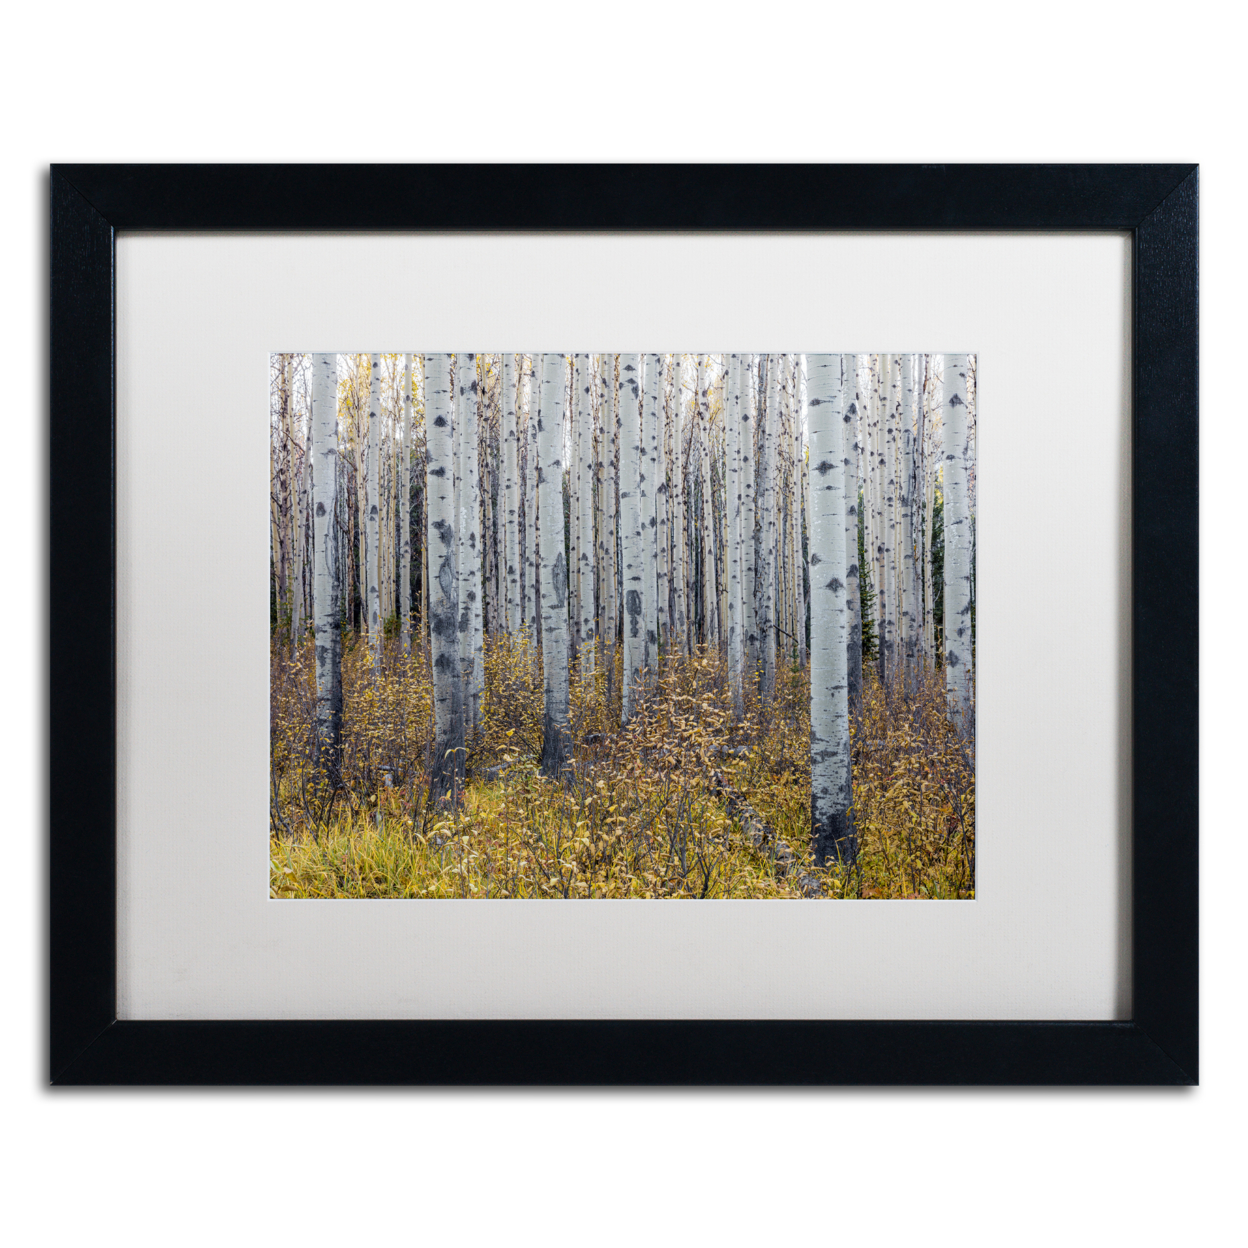 Pierre Leclerc 'Aspen Trees In Autumn' Black Wooden Framed Art 18 X 22 Inches